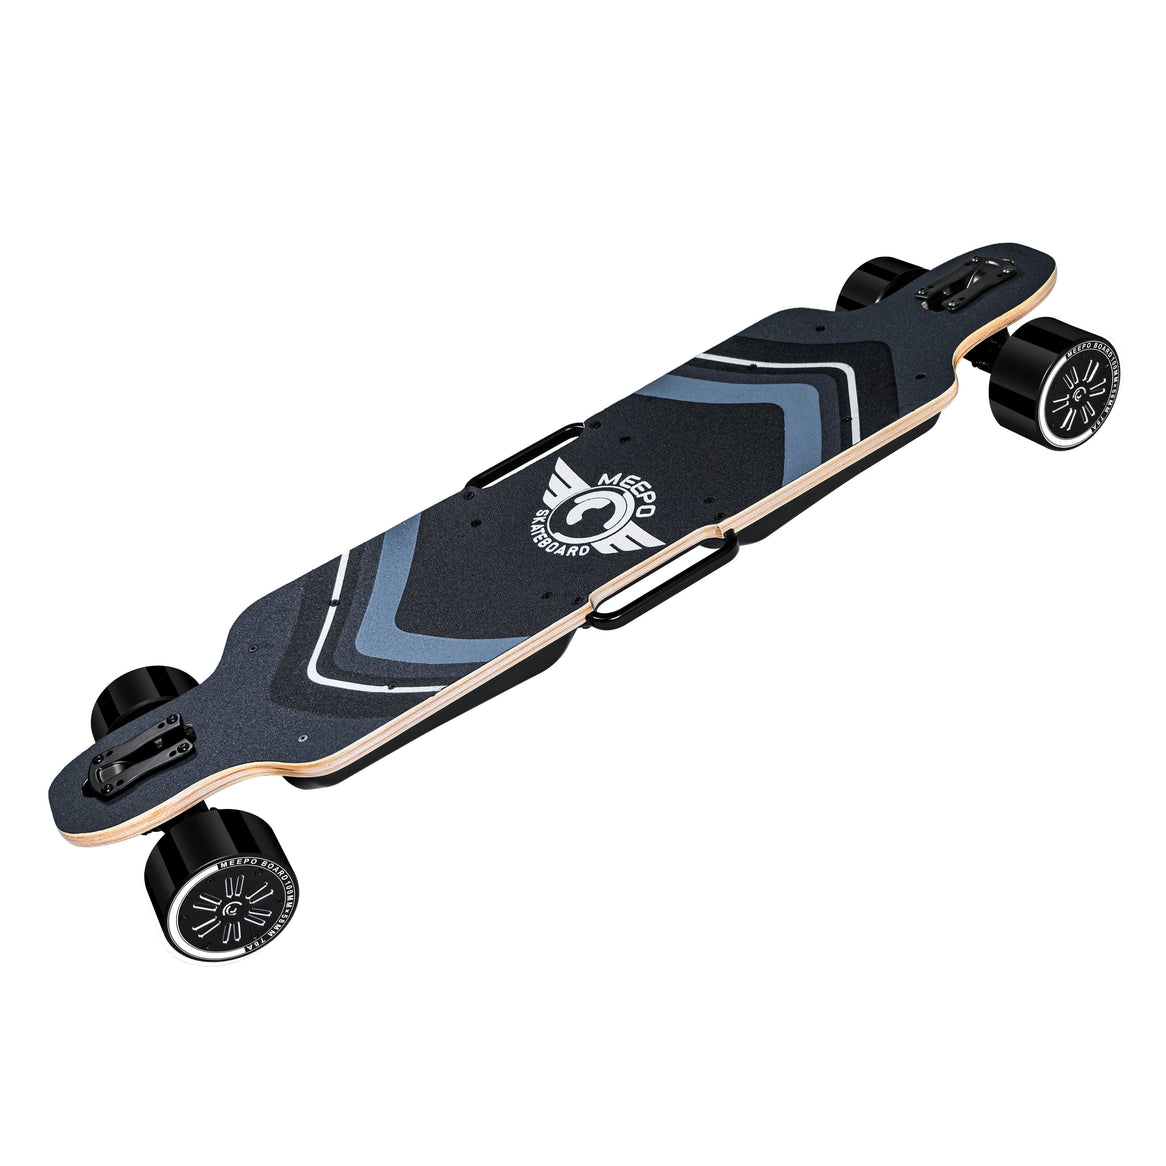 Meepo Board Electric Skateboard with All Wheel Drive - Side View, Grip Tape, Handles, Hub Motors